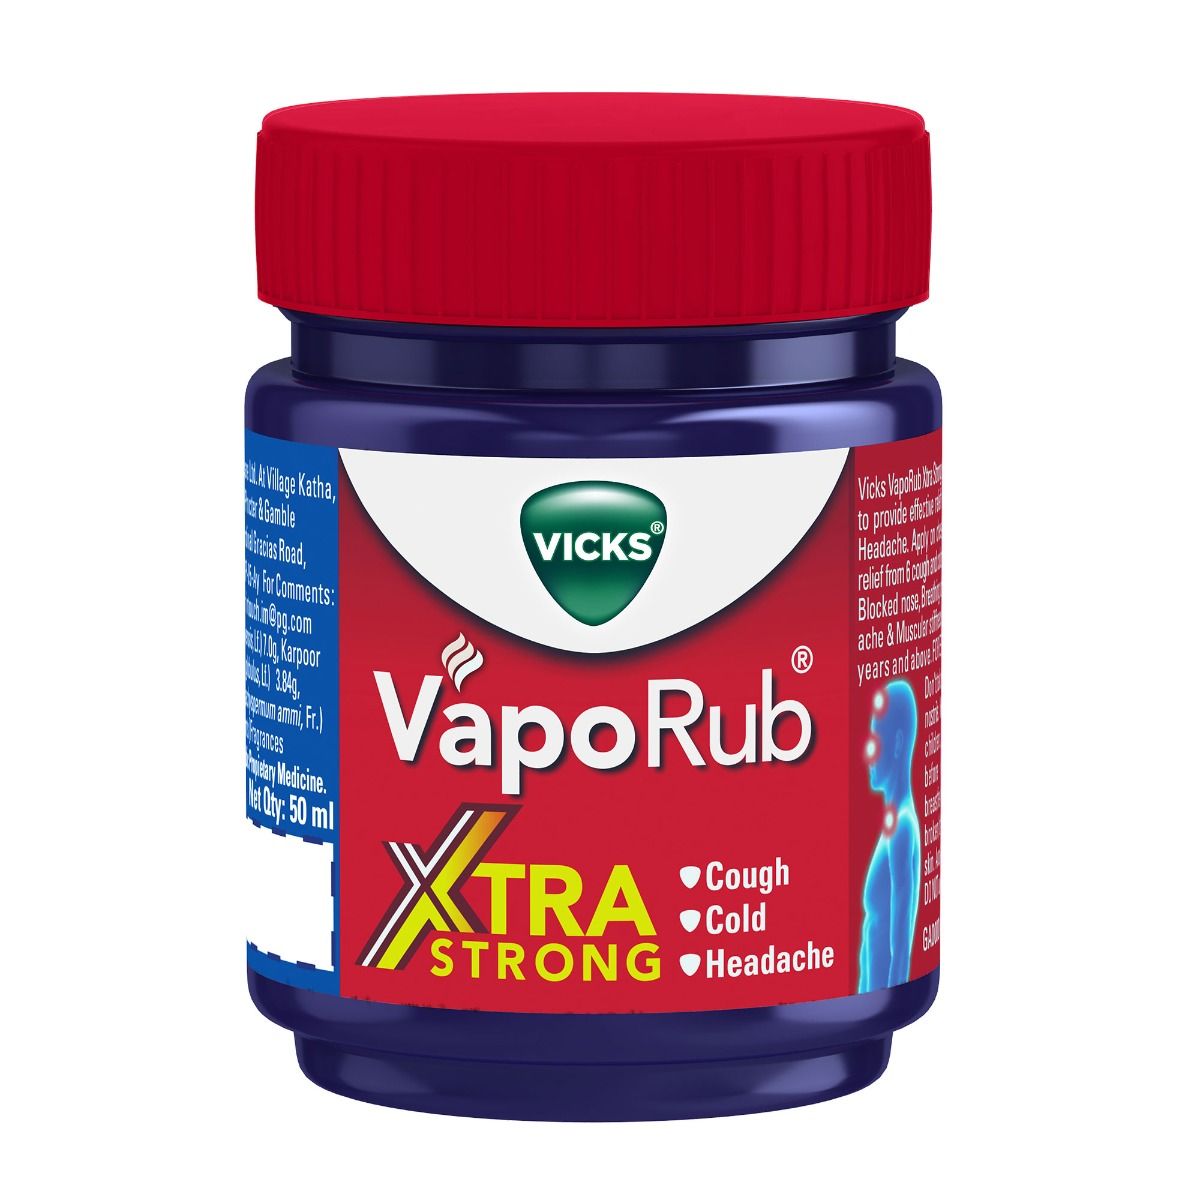 Vicks Vaporub Xtra Strong, 50 ml, Pack of 1 